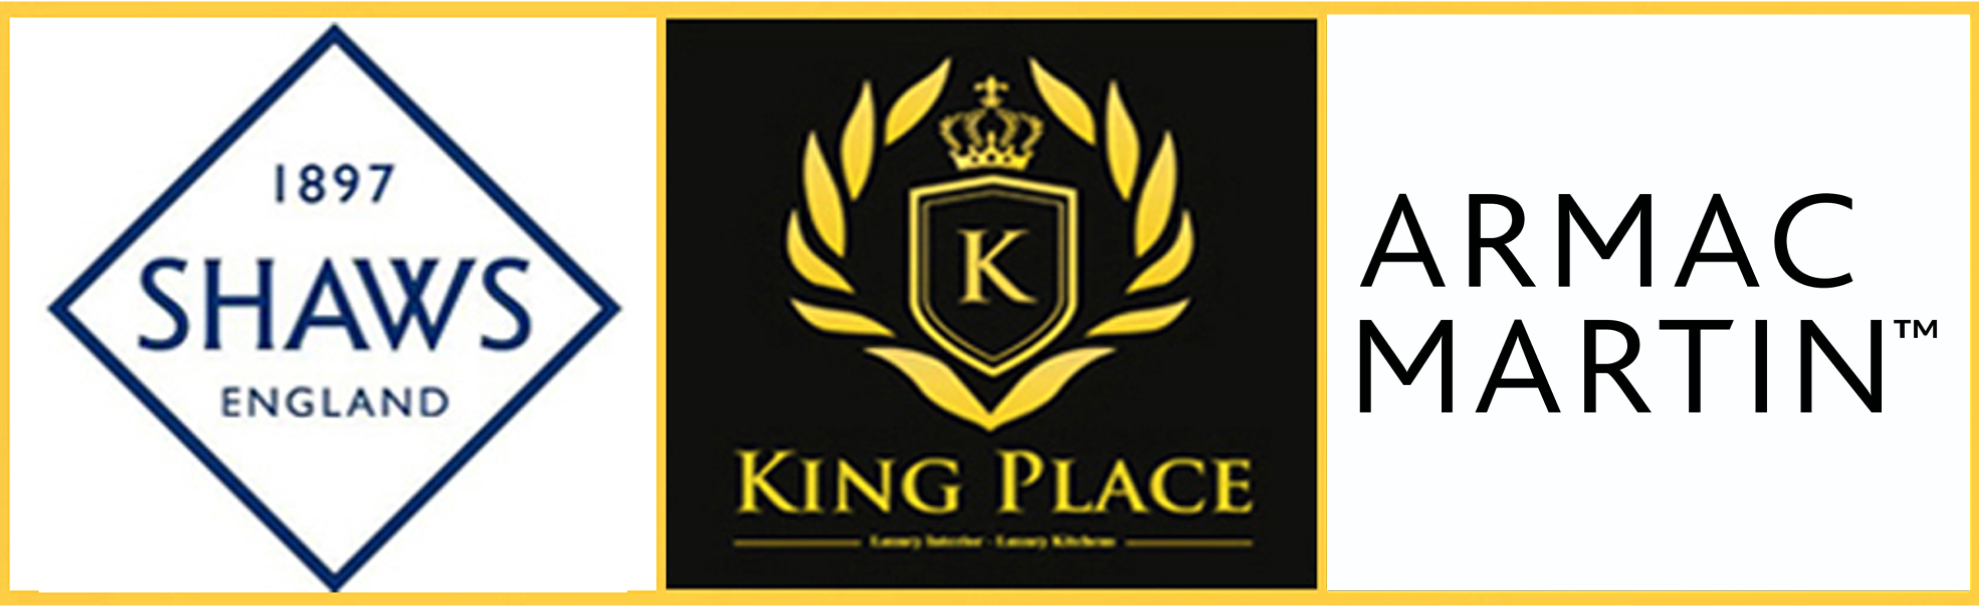 KING PLACE - BESPOKE INTERIOR DESIGN